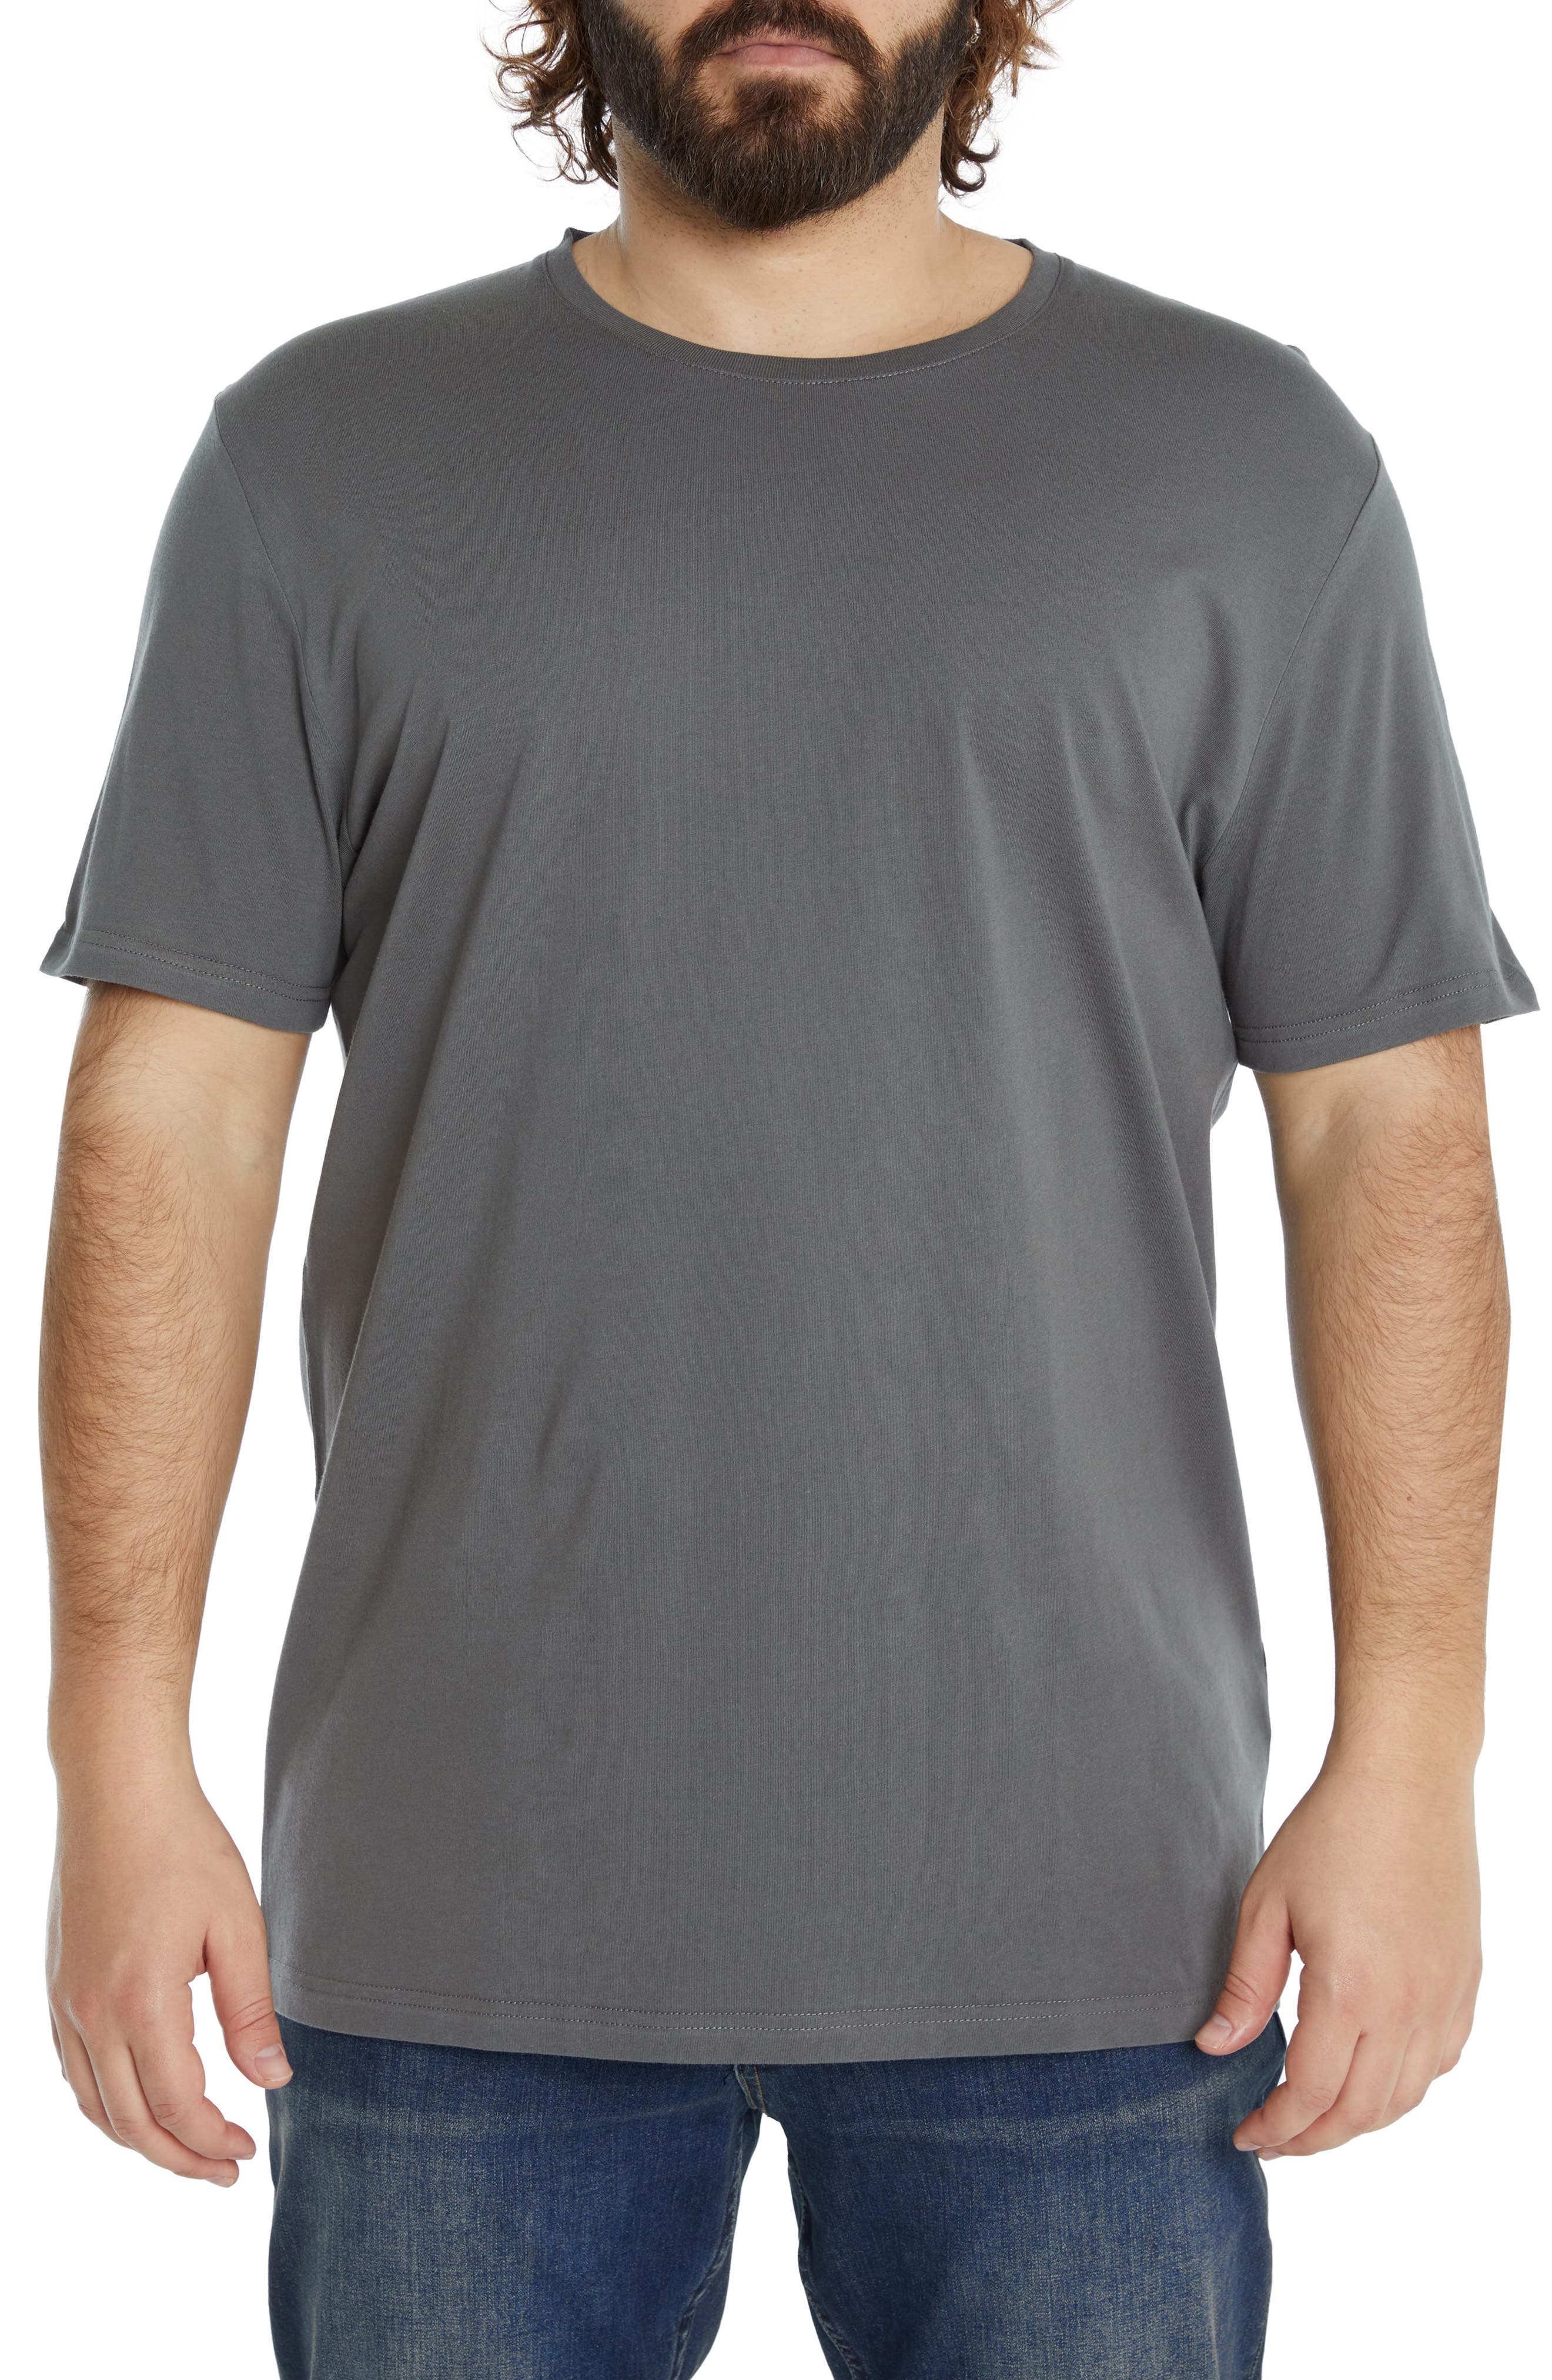 Johnny Bigg Essential Longline T-Shirt in Khaki